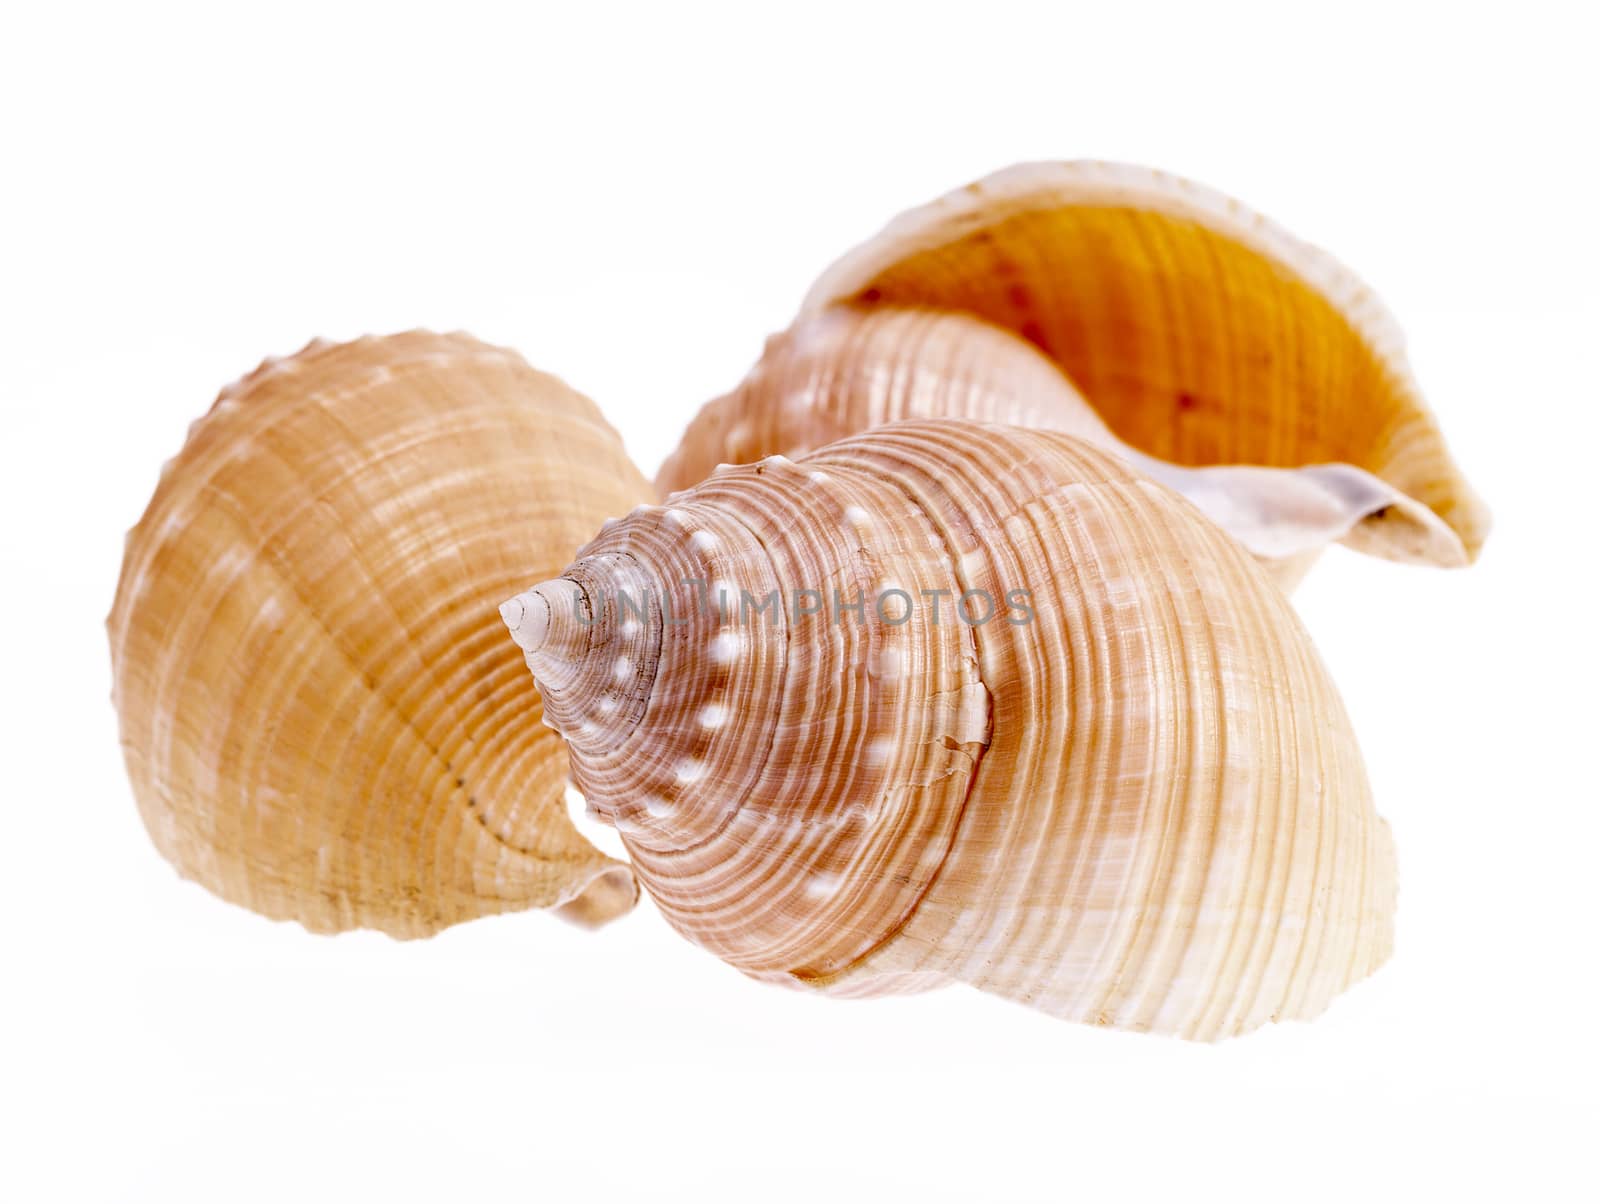 Sea shells of marine snails isolated on white background by mychadre77